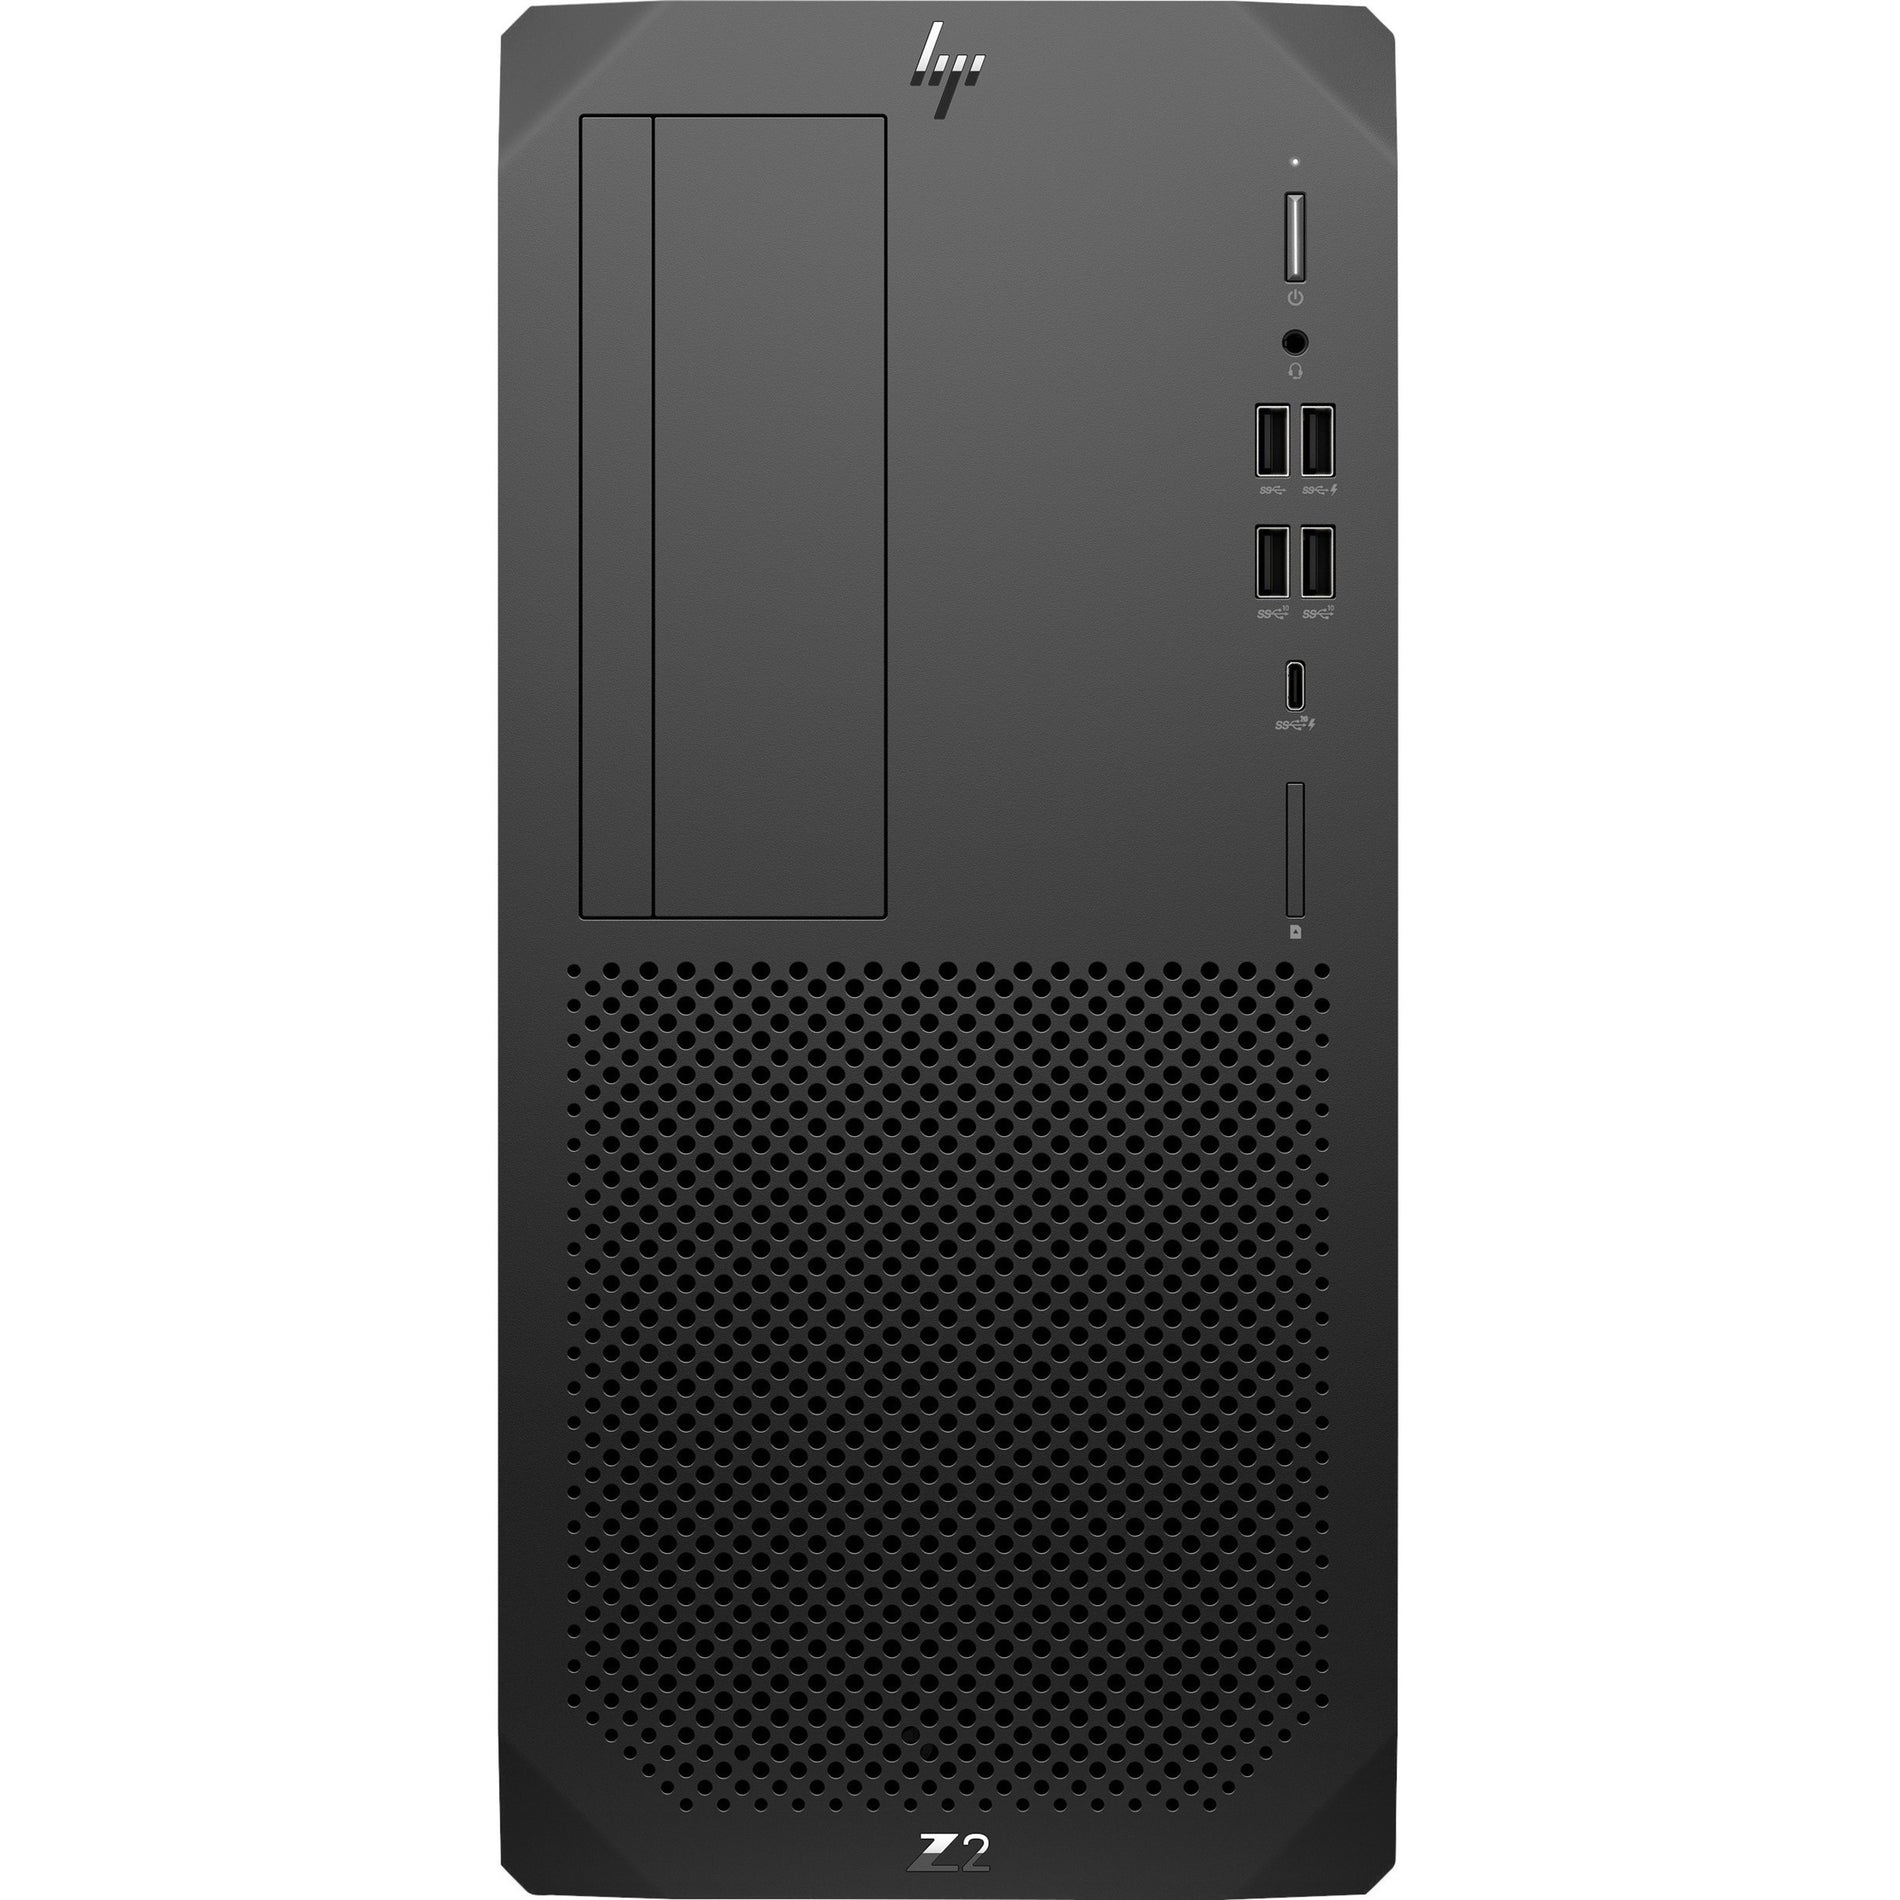 HP Z2 G8 Tower Workstation Desktop PC, Intel Core i5 Hexa-core, 8GB RAM, 256GB SSD, Windows 10 Pro